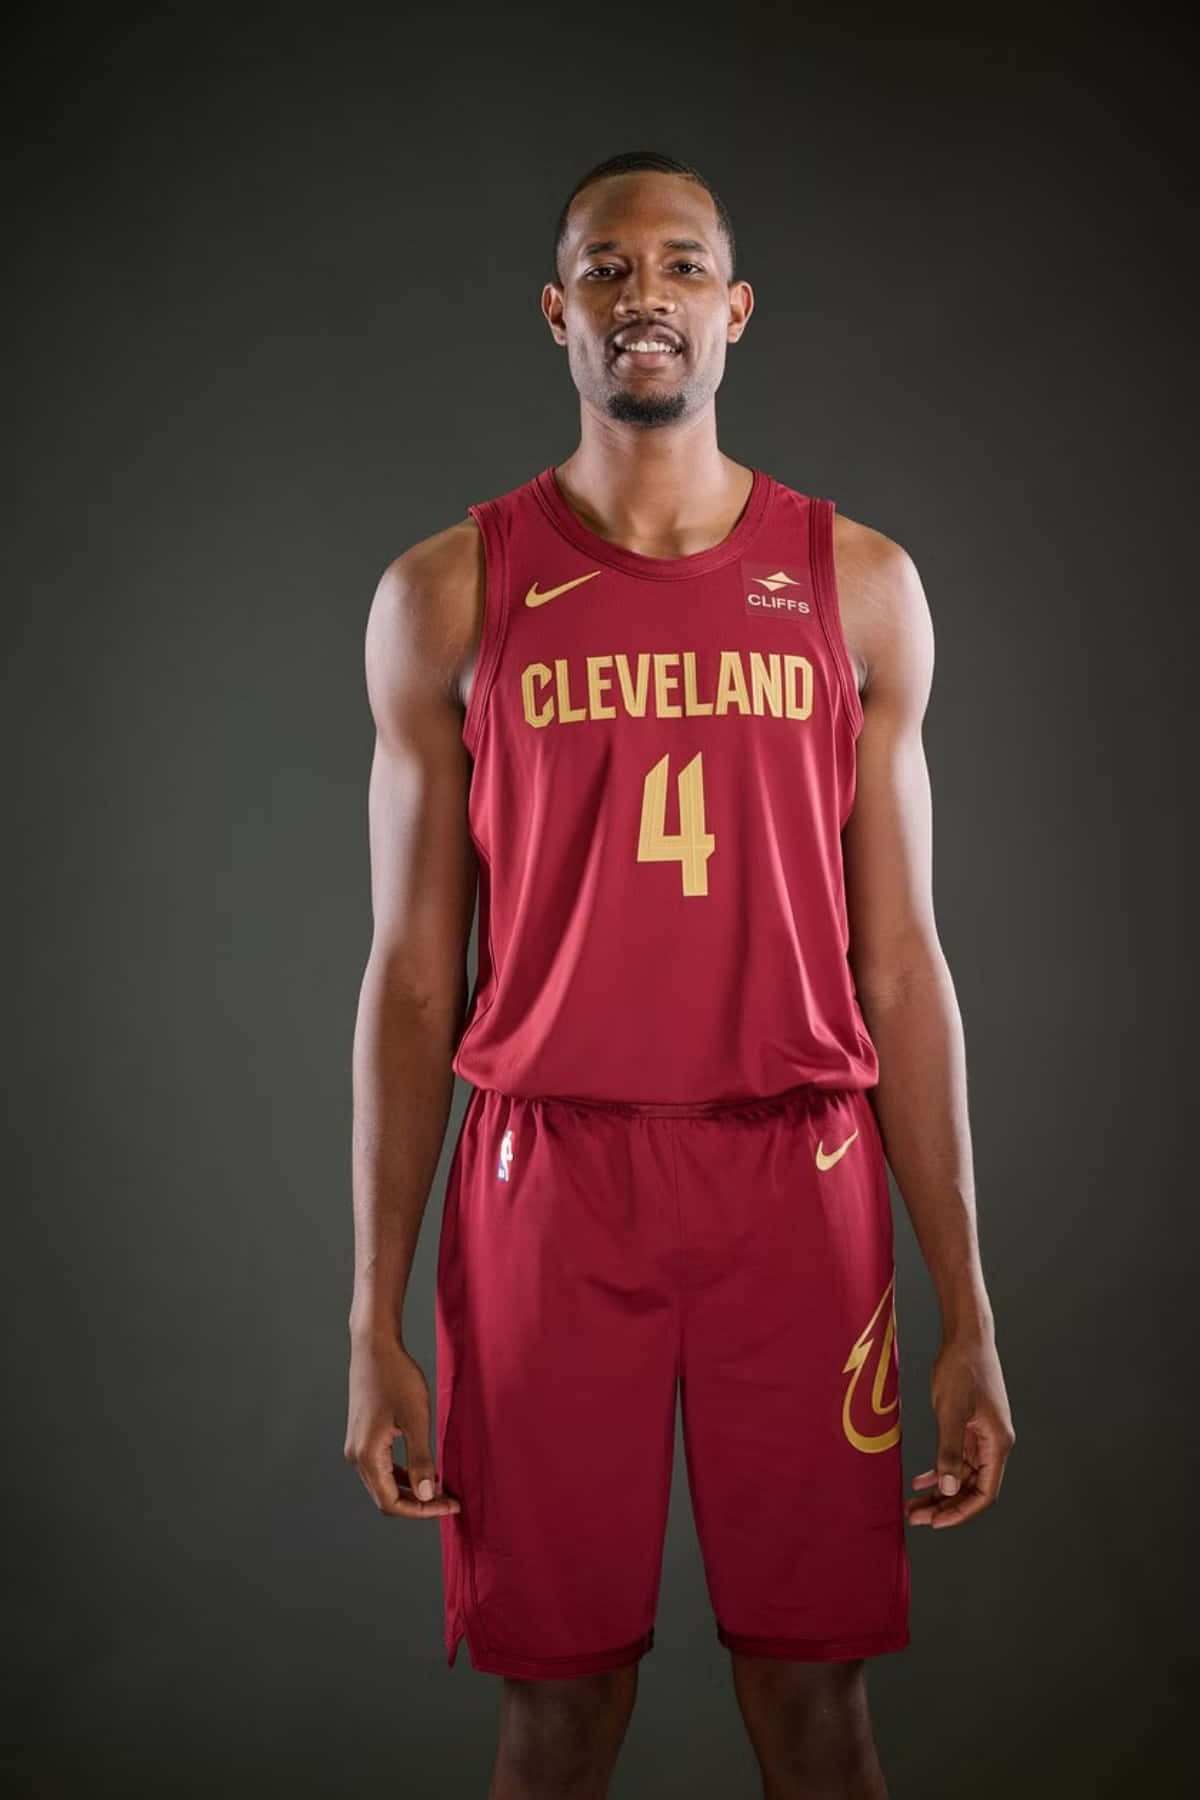 Cleveland Basketball Player Number4 Wallpaper